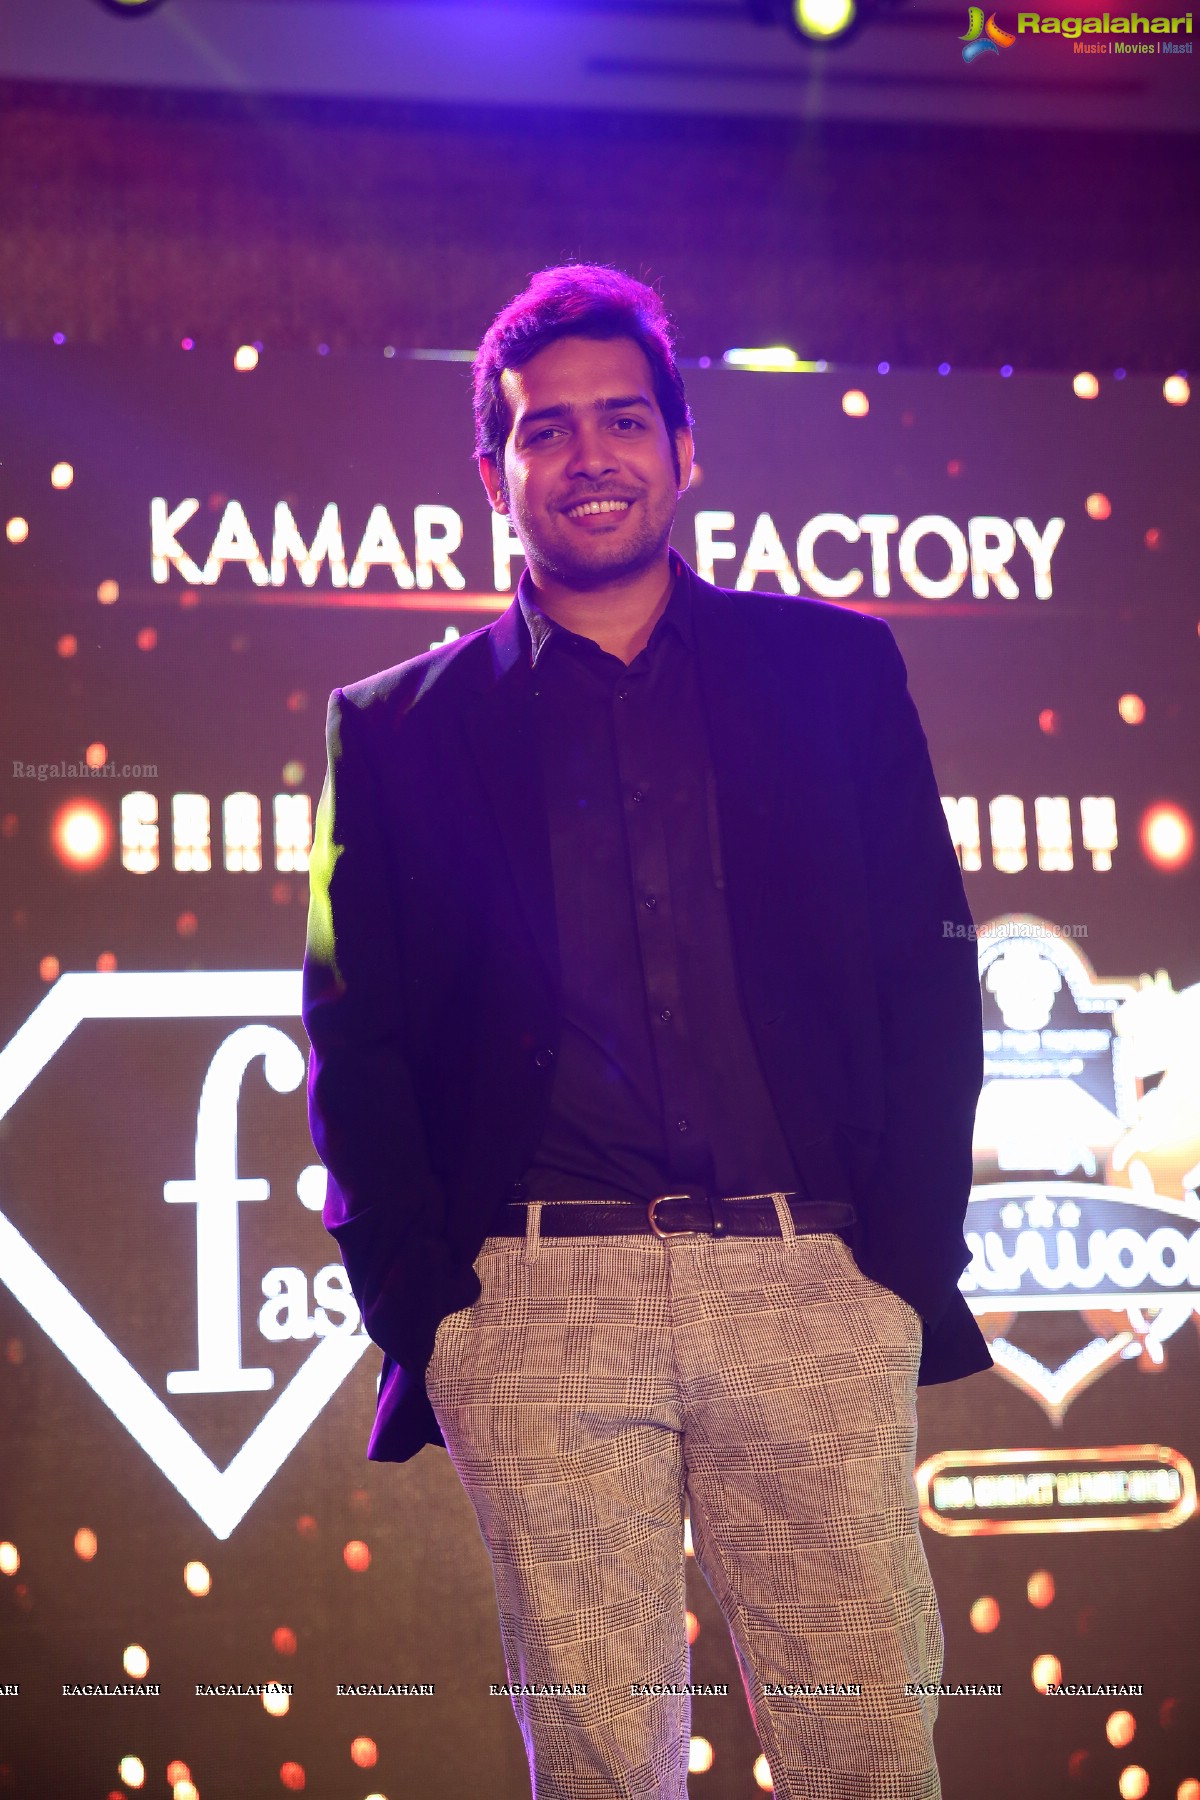 Kamar Film Factory Launches Its First FTV Fashion Calendar @ Trident Hotel, Madhapur